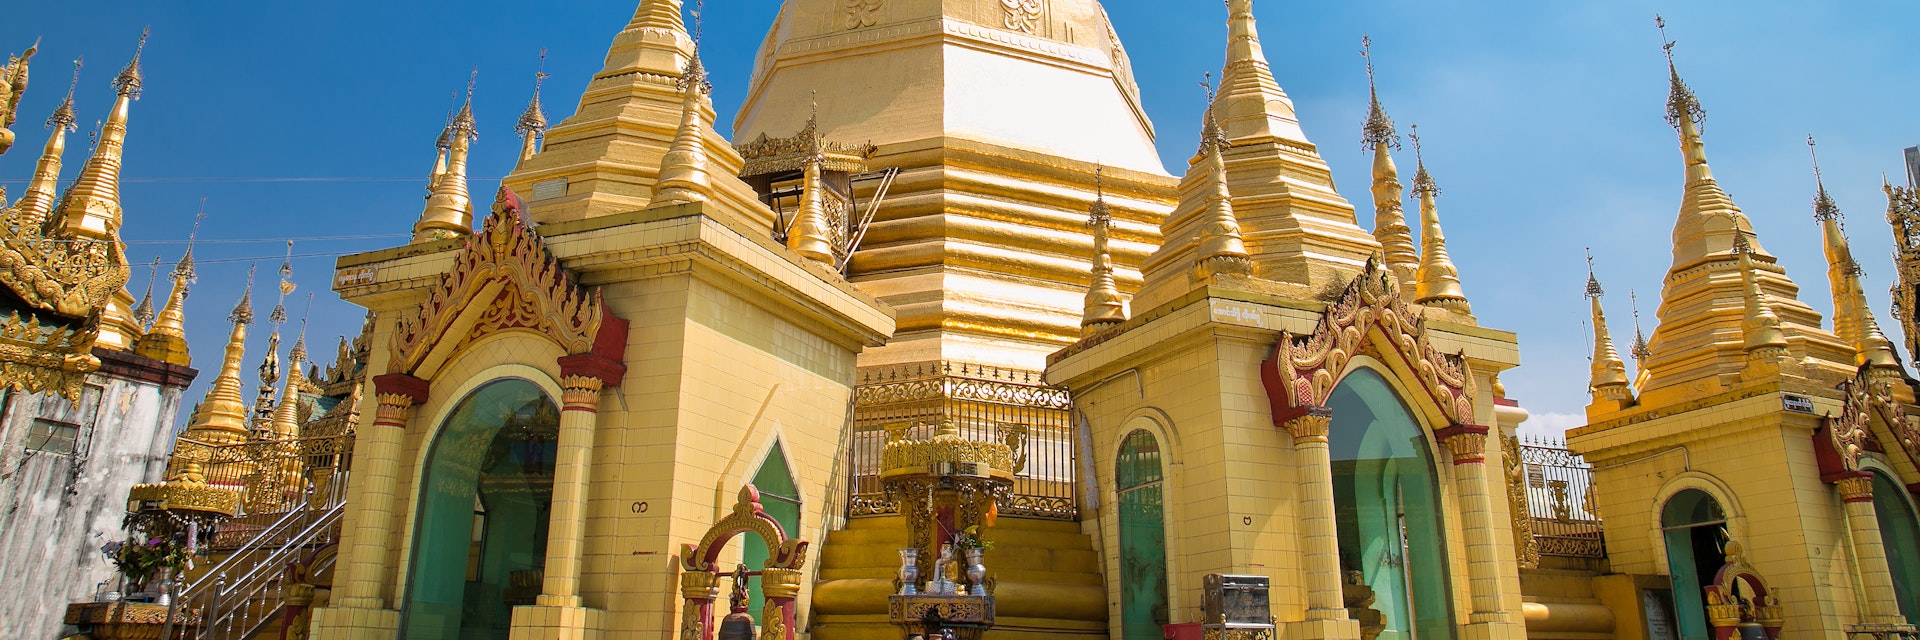 Sule pagoda in Yangon, Myanmar.